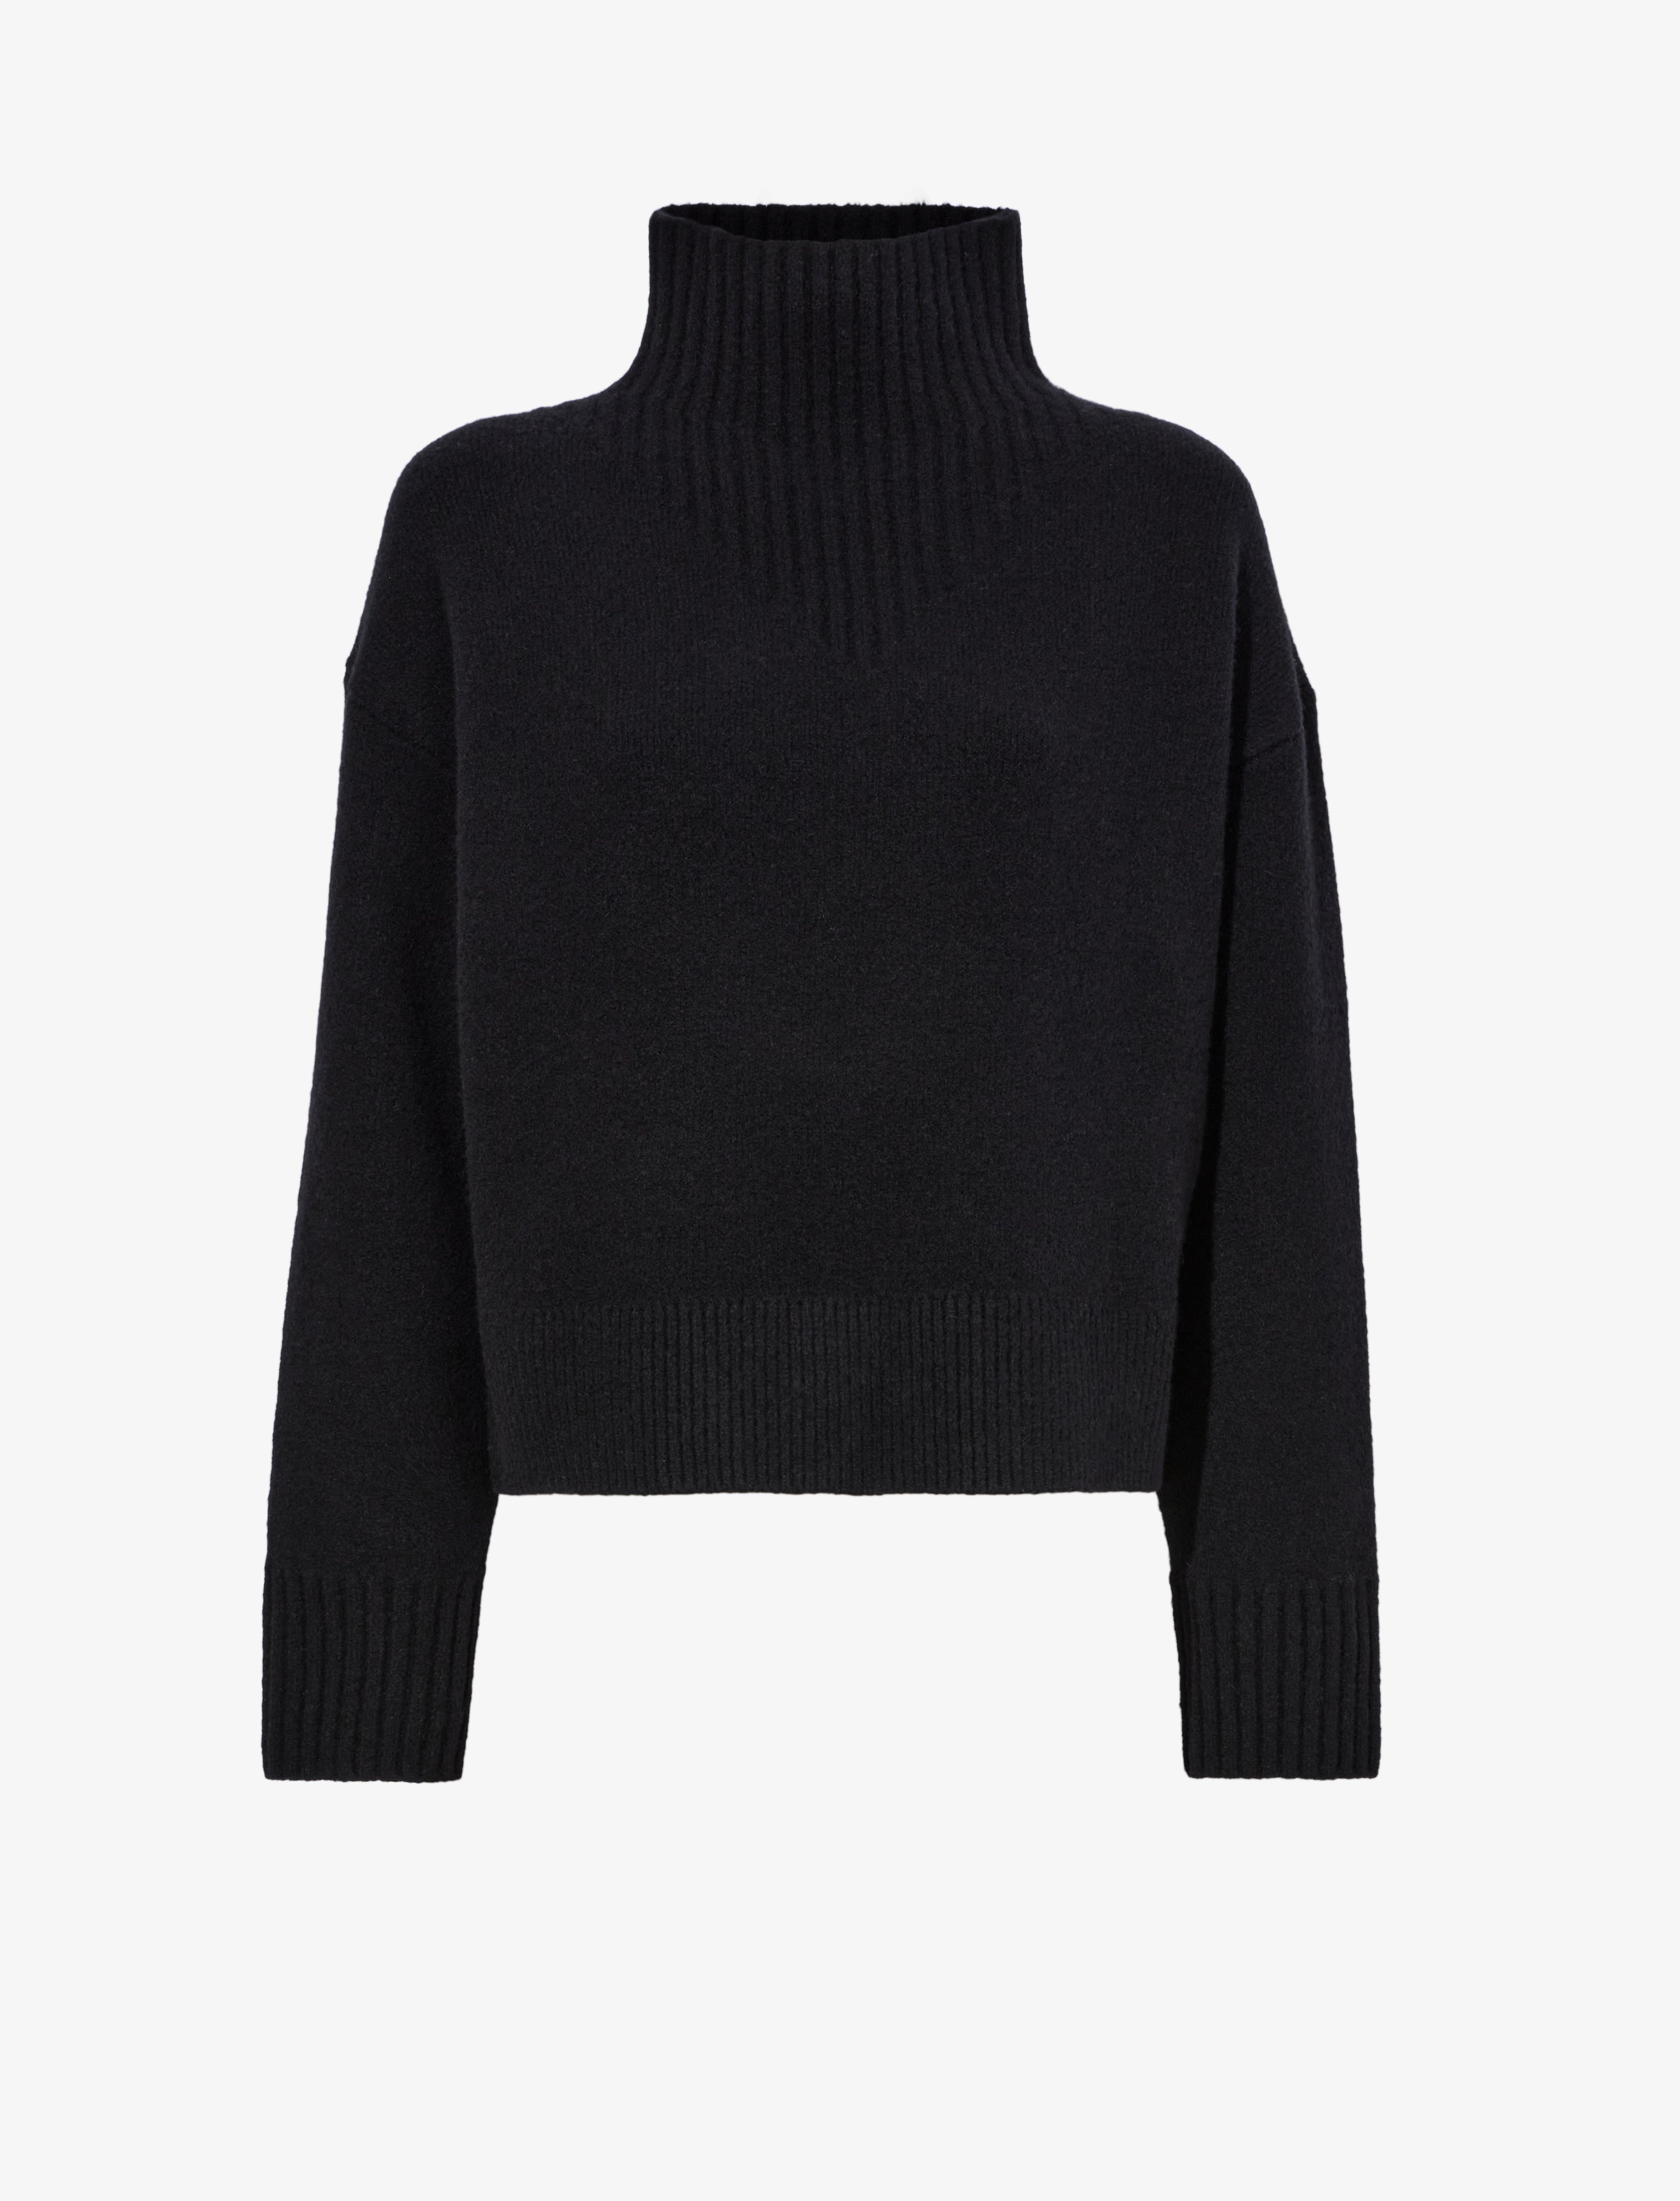 Alma Sweater in Lofty Eco Cashmere - 1